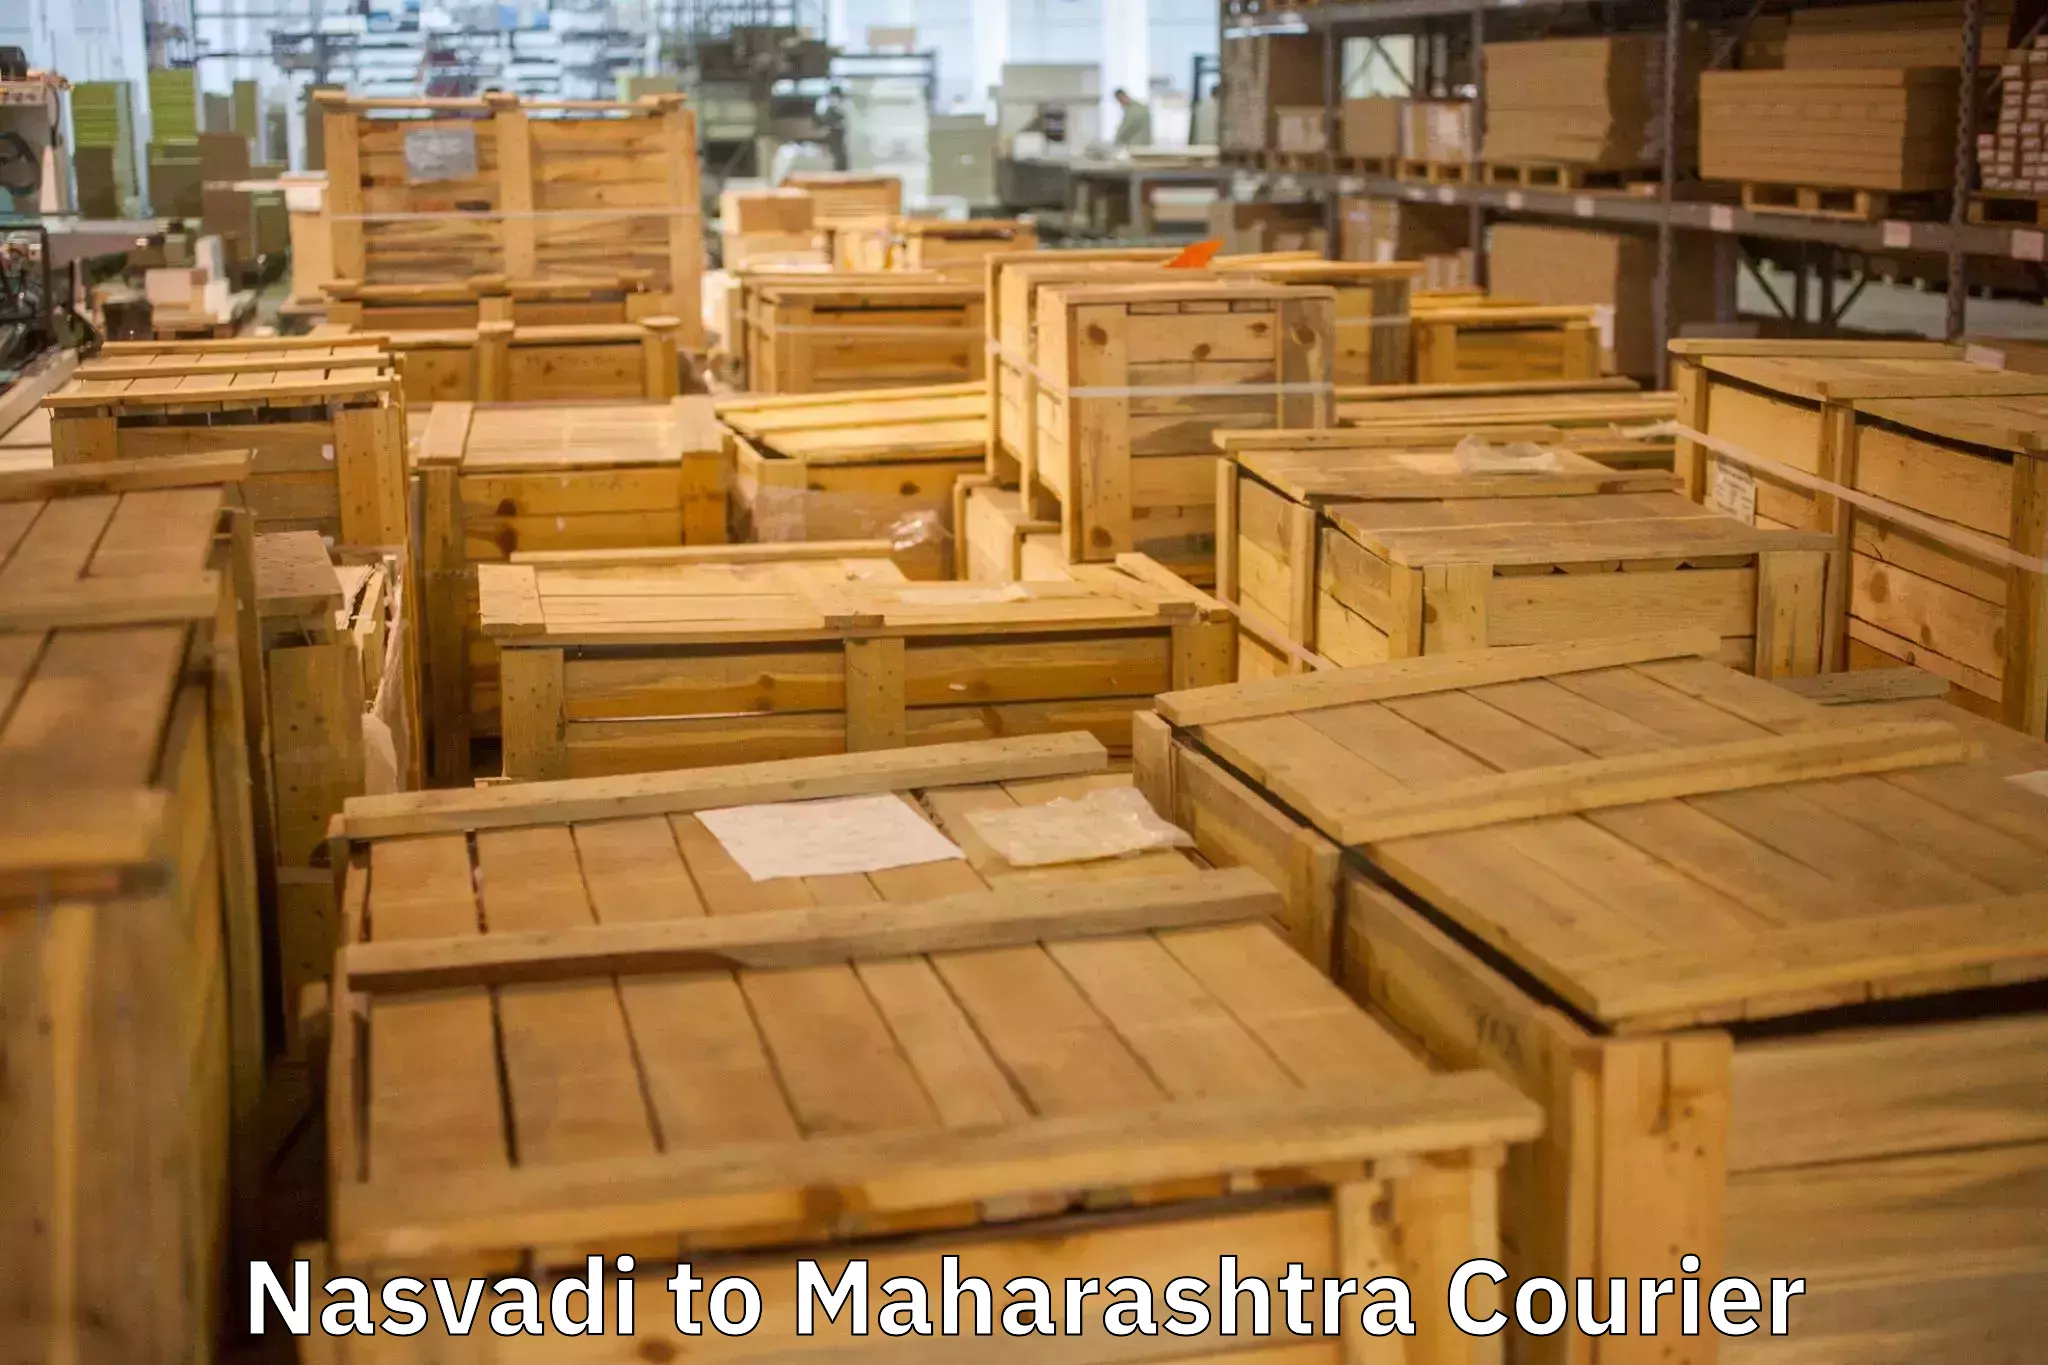 Furniture relocation experts Nasvadi to Chalisgaon